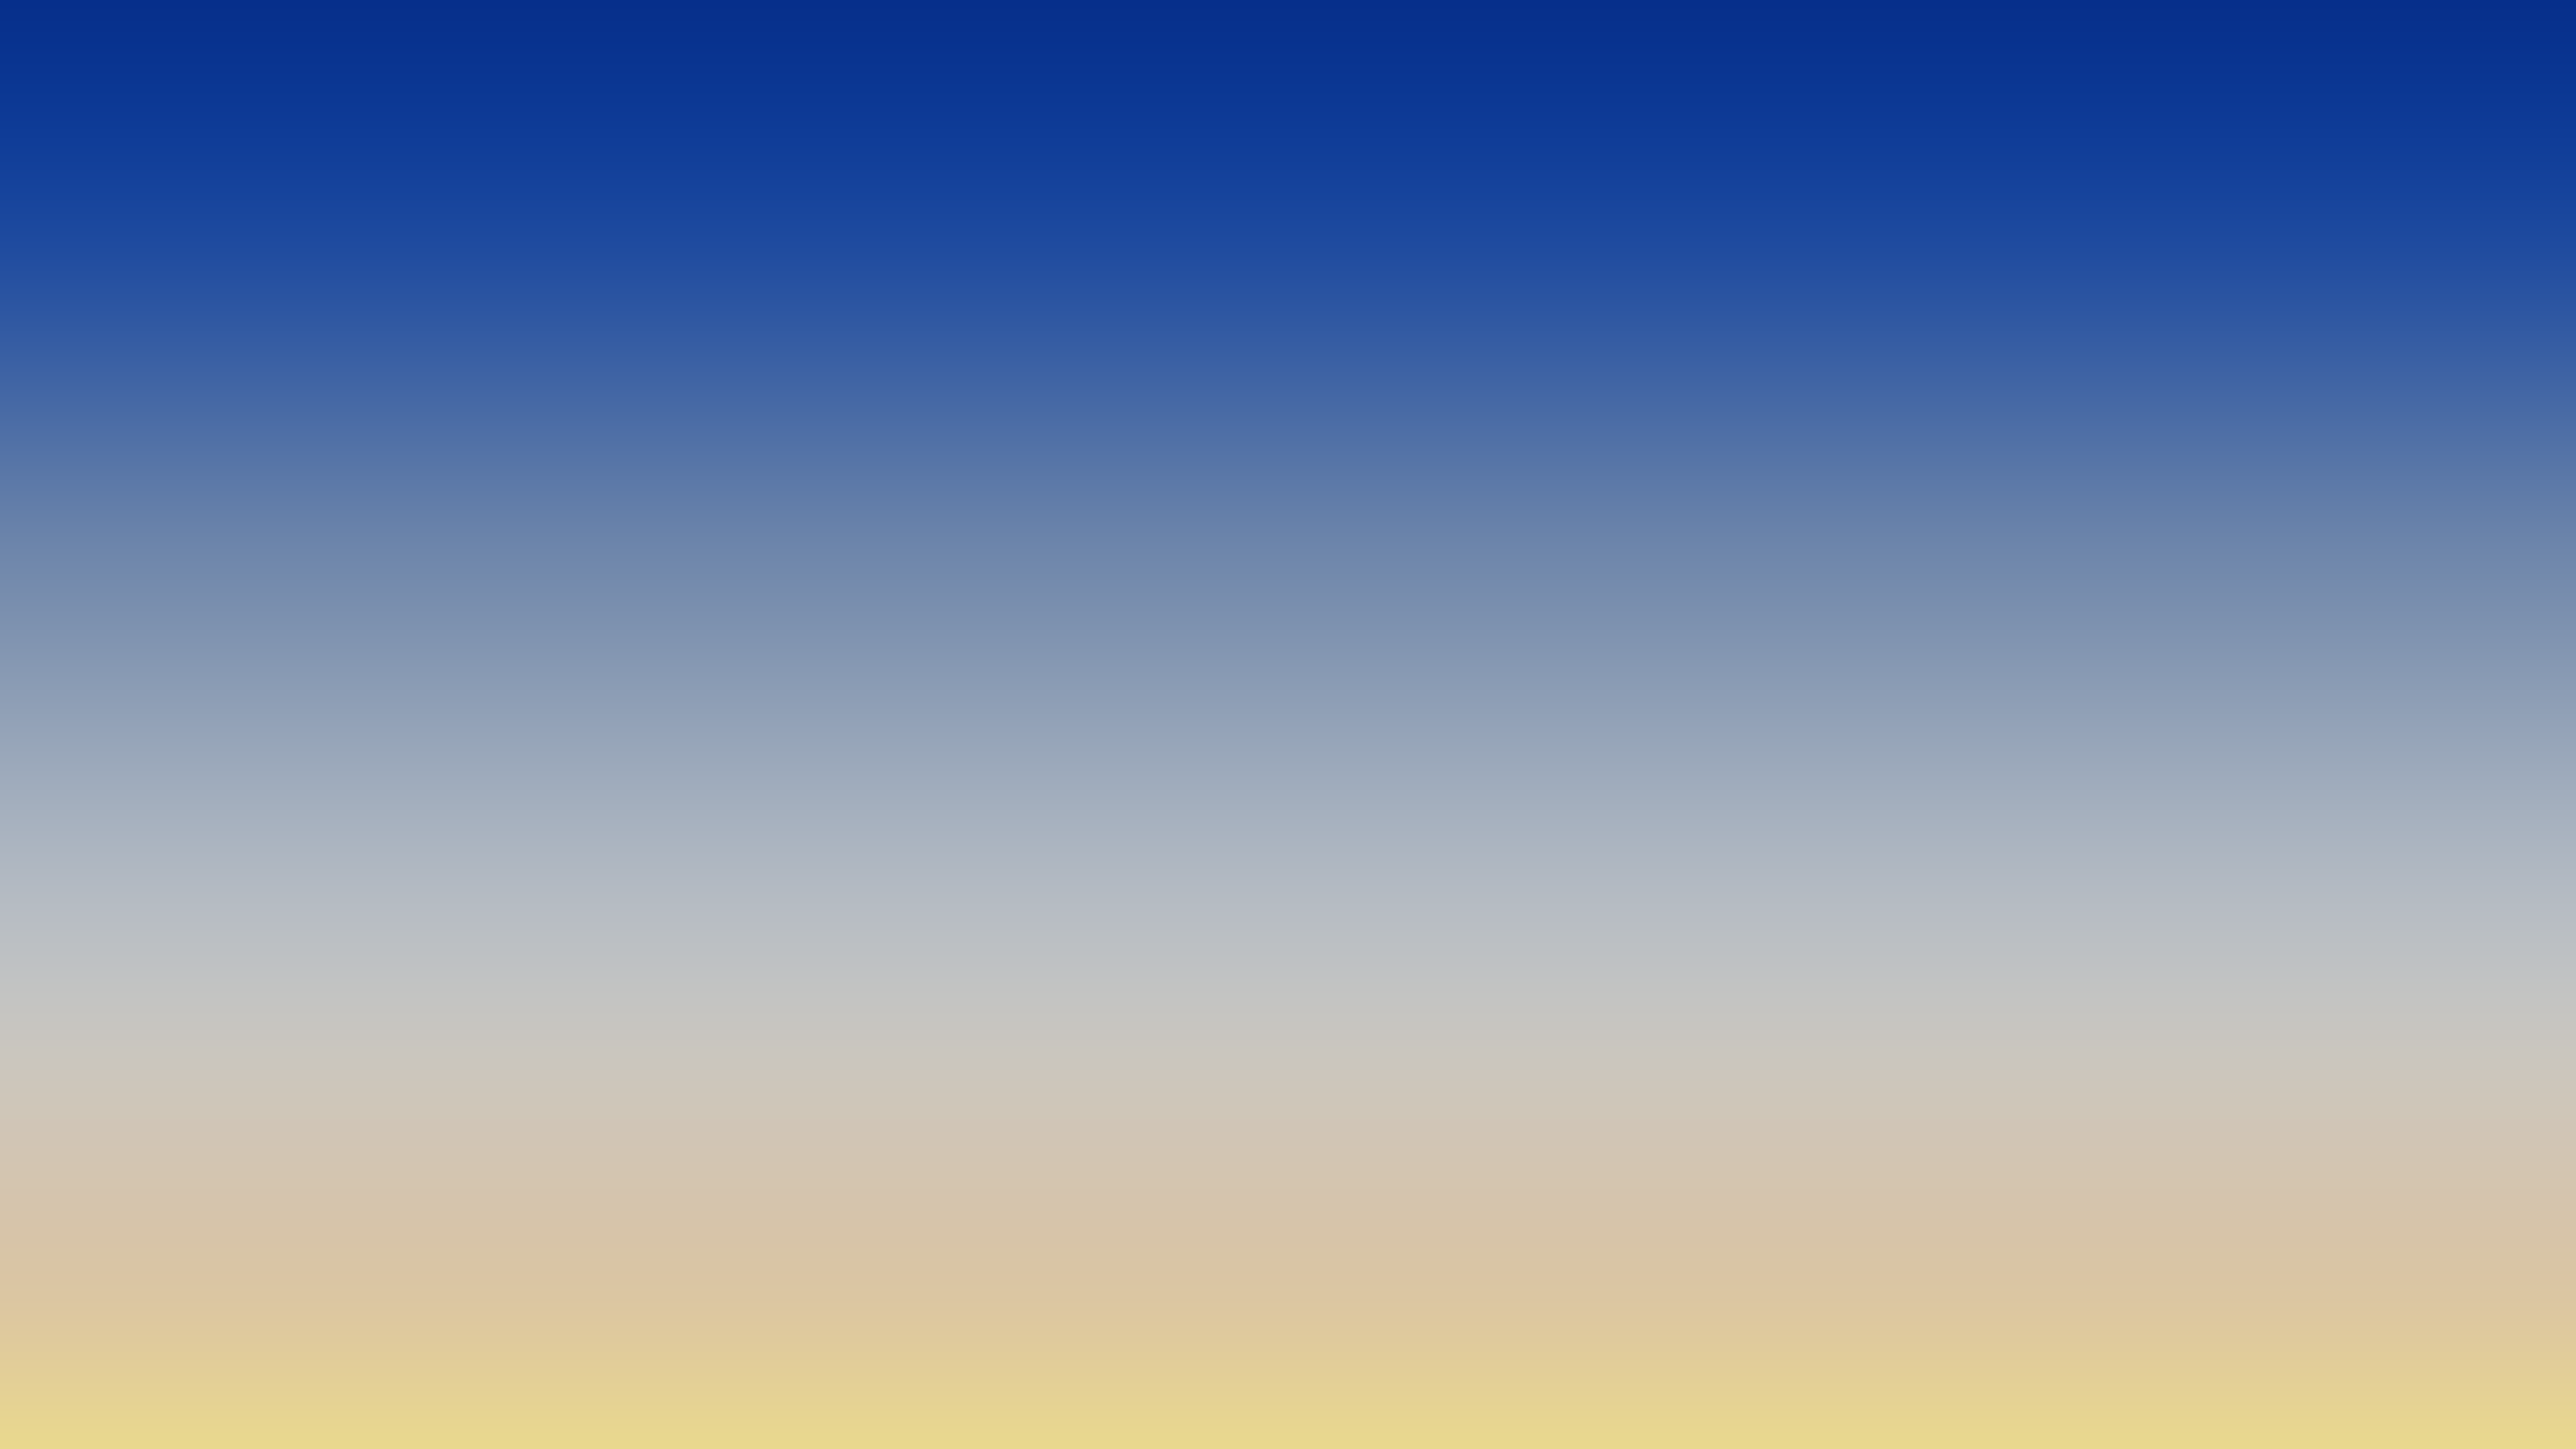 General 3840x2160 gradient minimalism blue simple background digital art